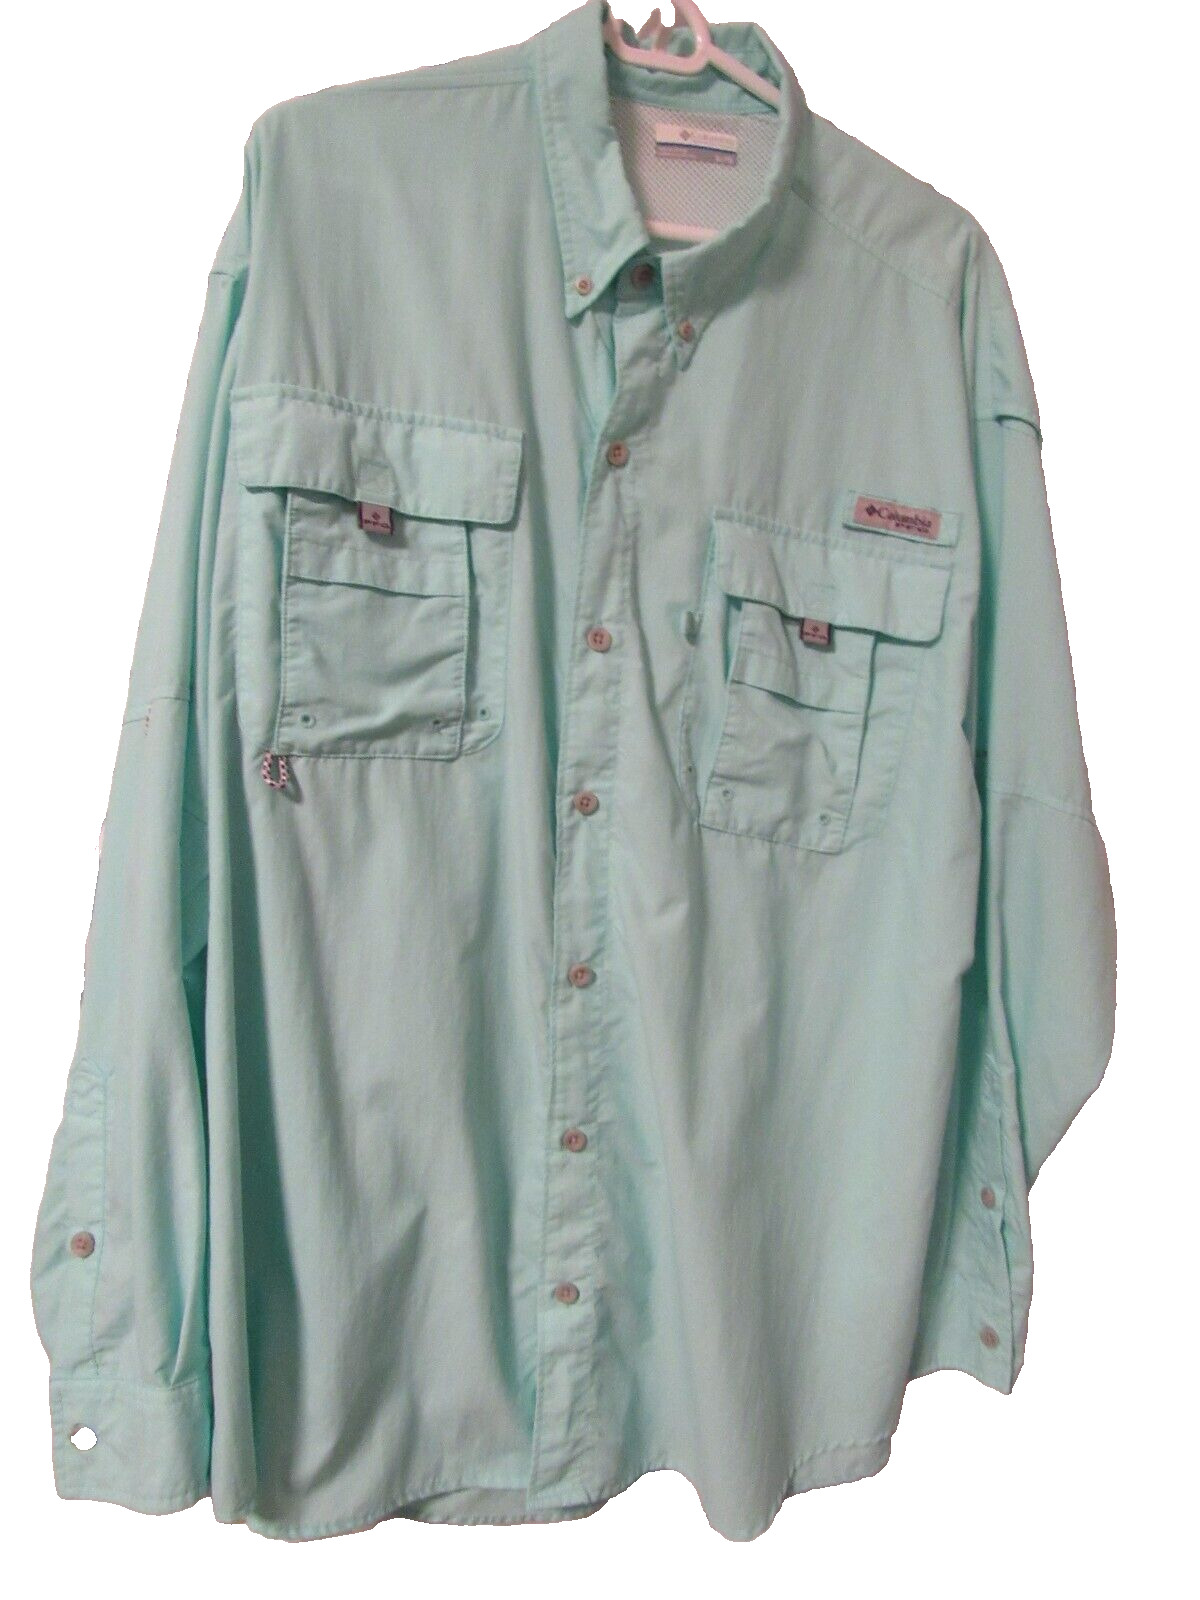 Columbia PFG Vented Fishing Shirt Men's Mint Aqua Green Lightweight Tamiami L/S